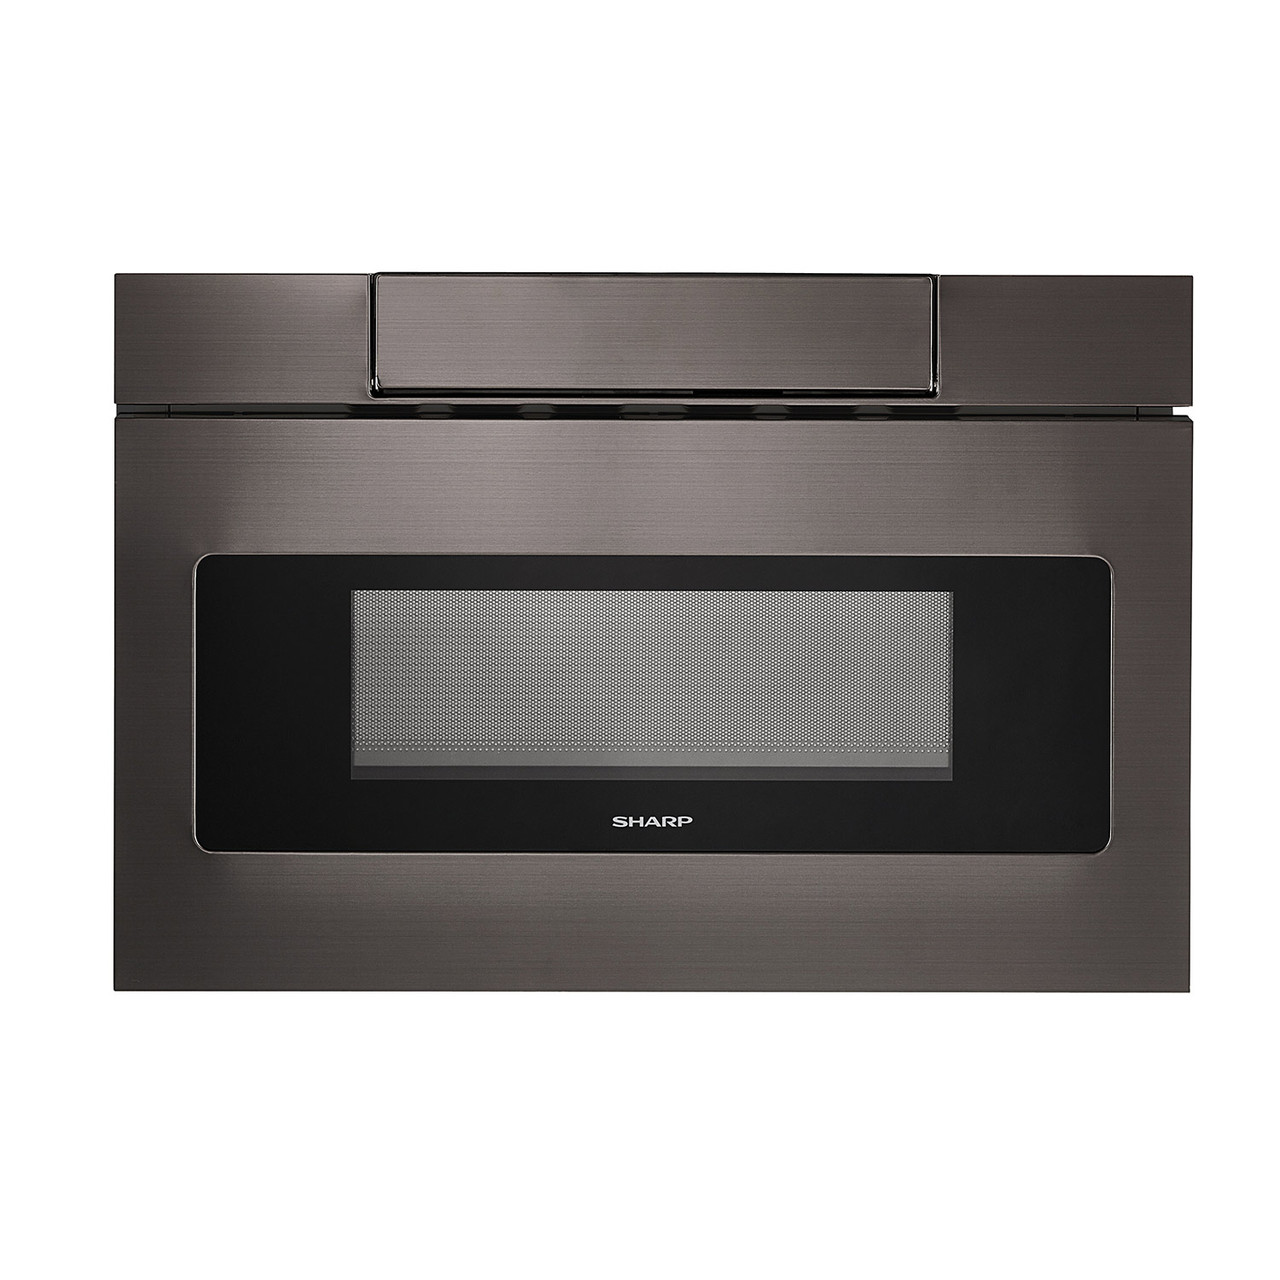 24 in. Black Stainless Steel Microwave Drawer (SMD2470AH)